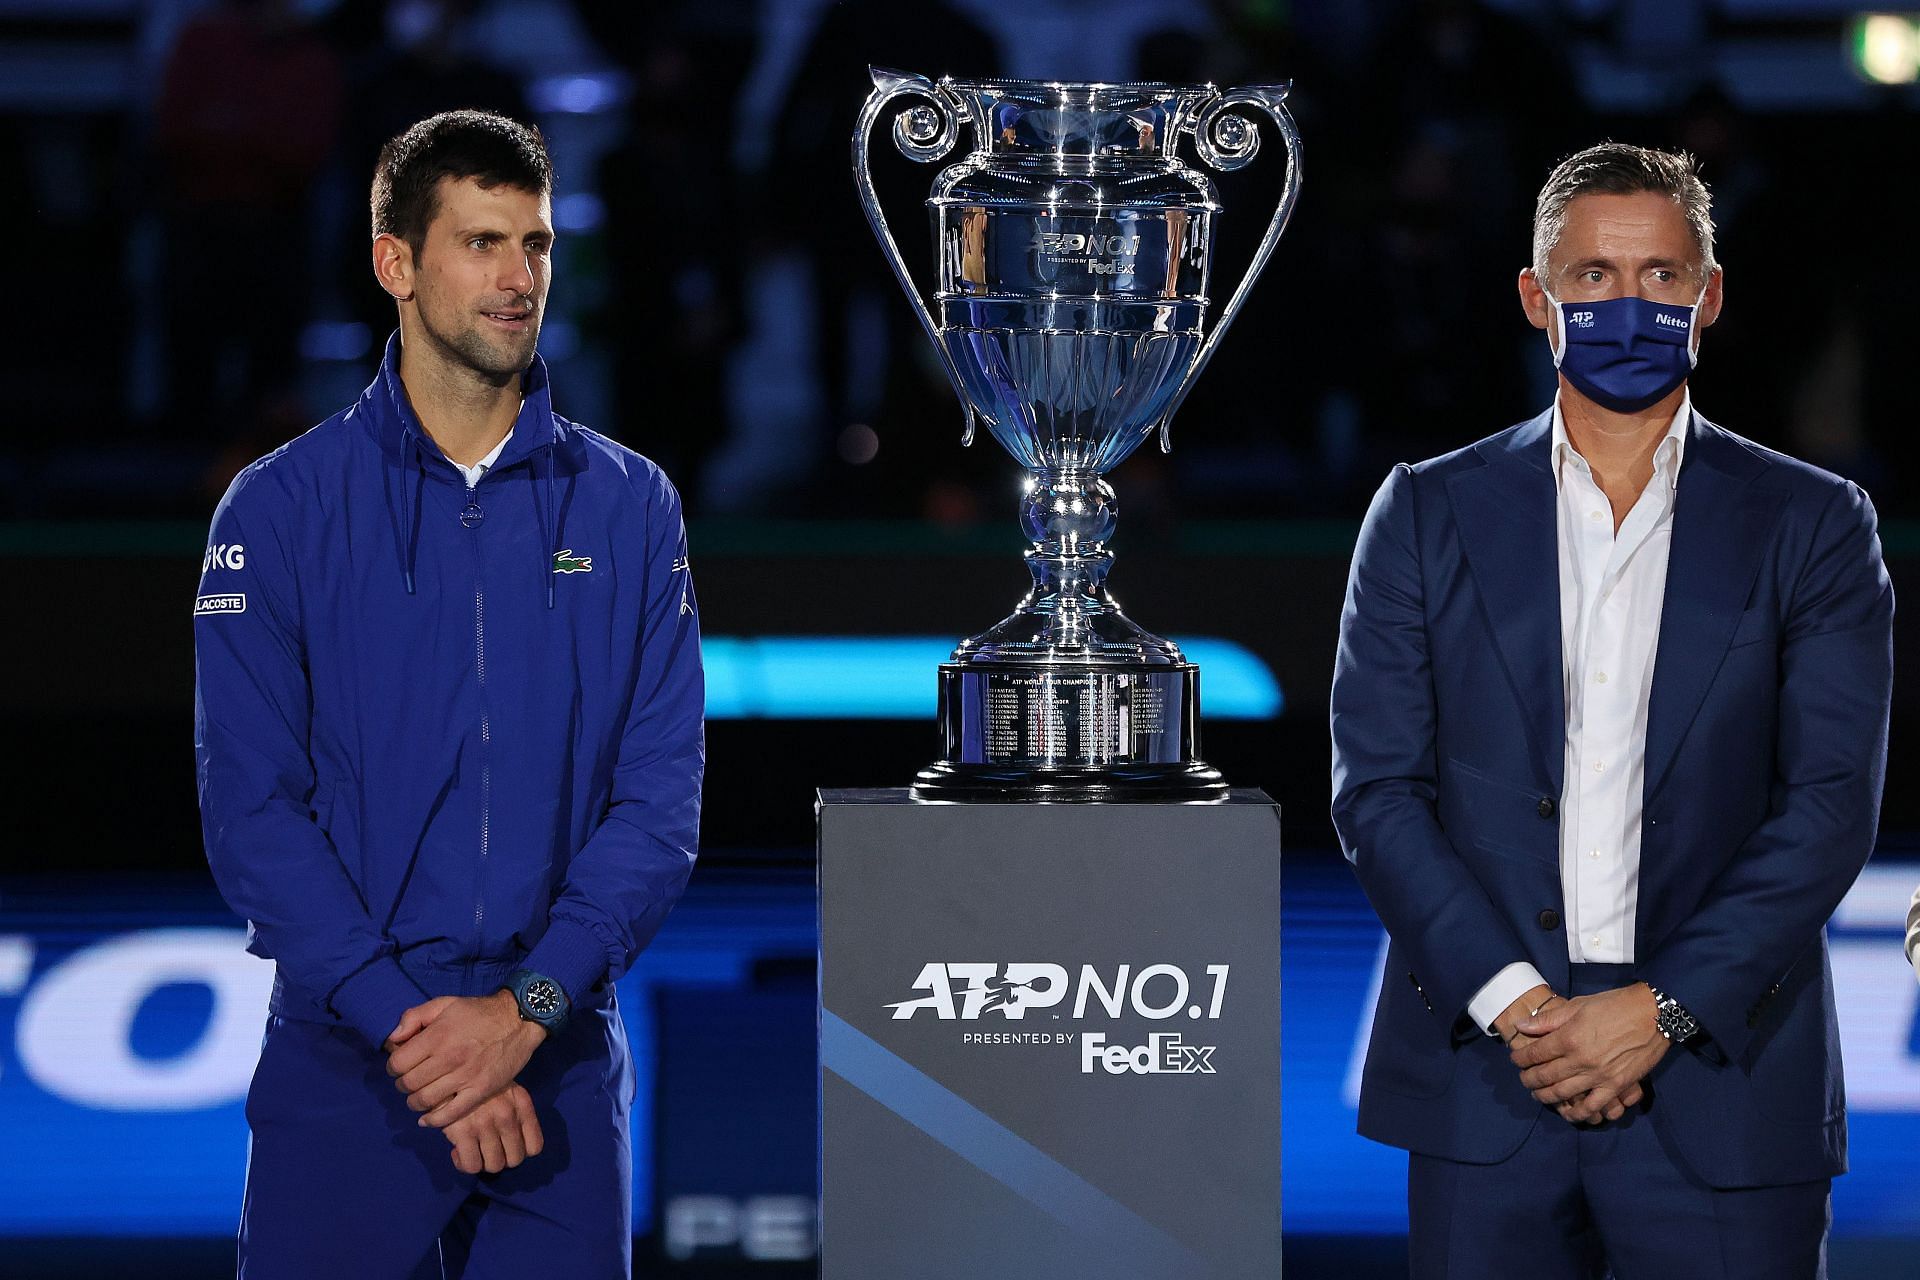 World No. 1 Novak Djokovic with Chairman of the ATP Tour, Andrea Gaudenzi